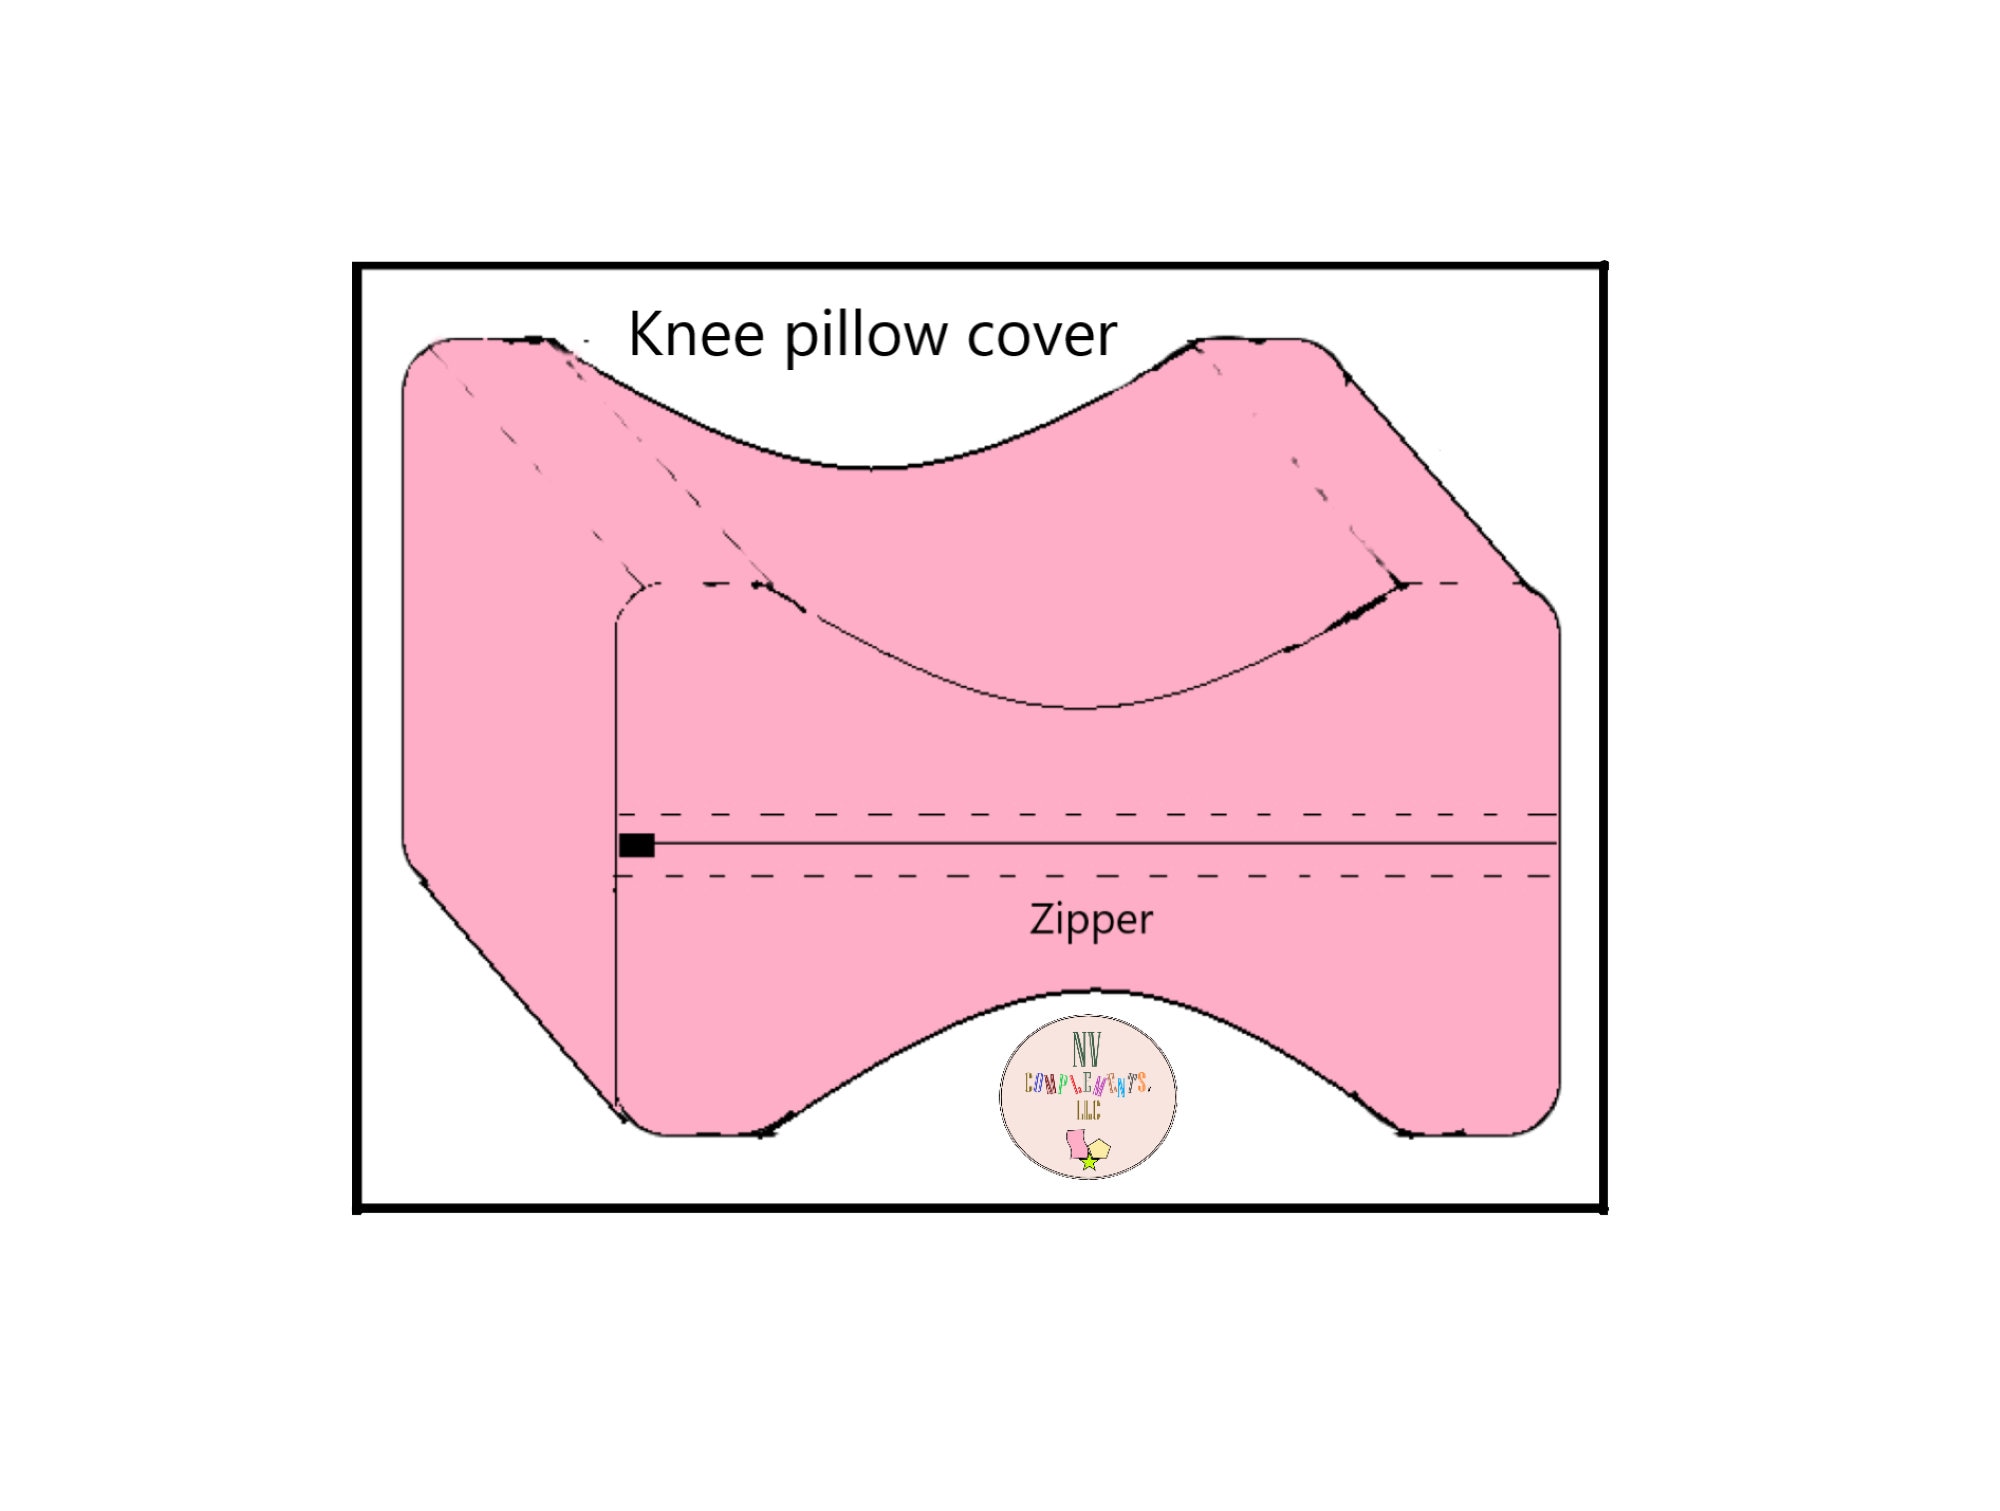 Cooling Memory Foam Leg Pillow for Back, Hip & Knee Support – Knee